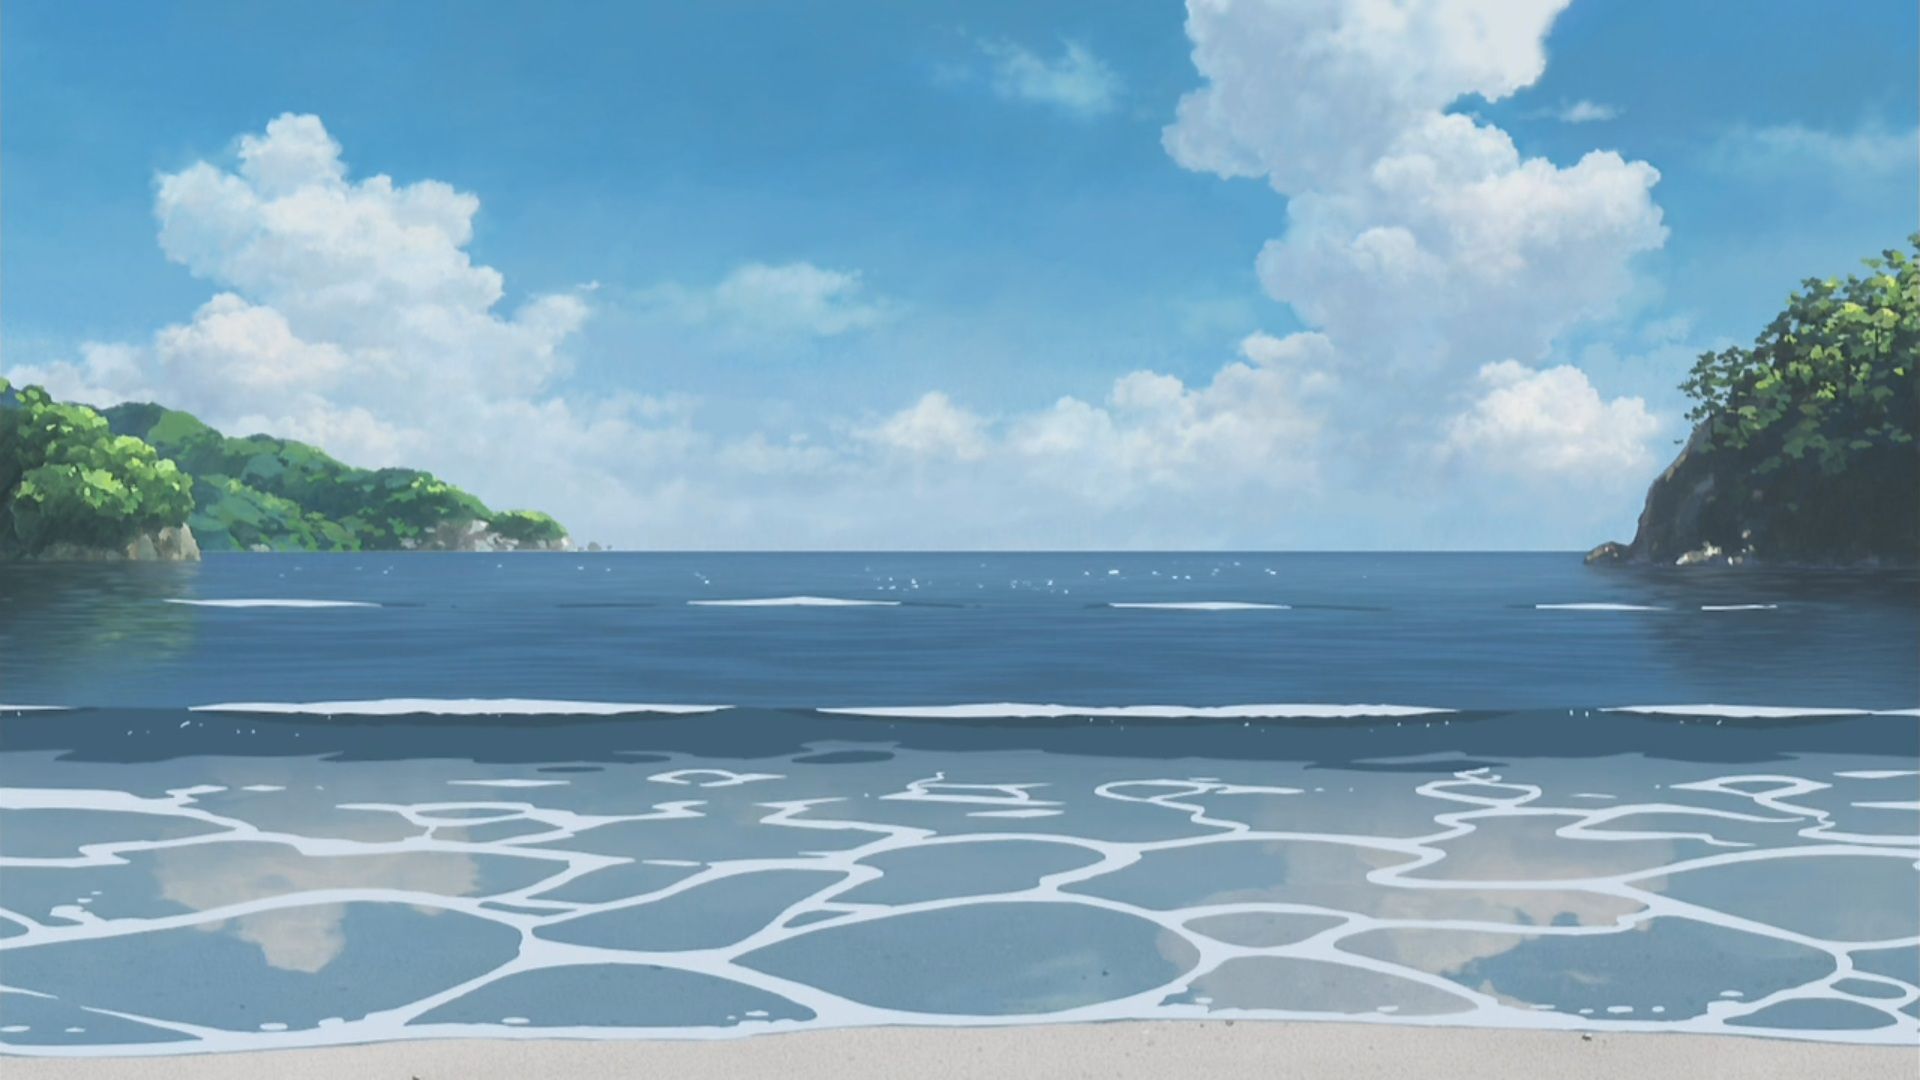 Anime Ocean Images - Free Download on Freepik-demhanvico.com.vn